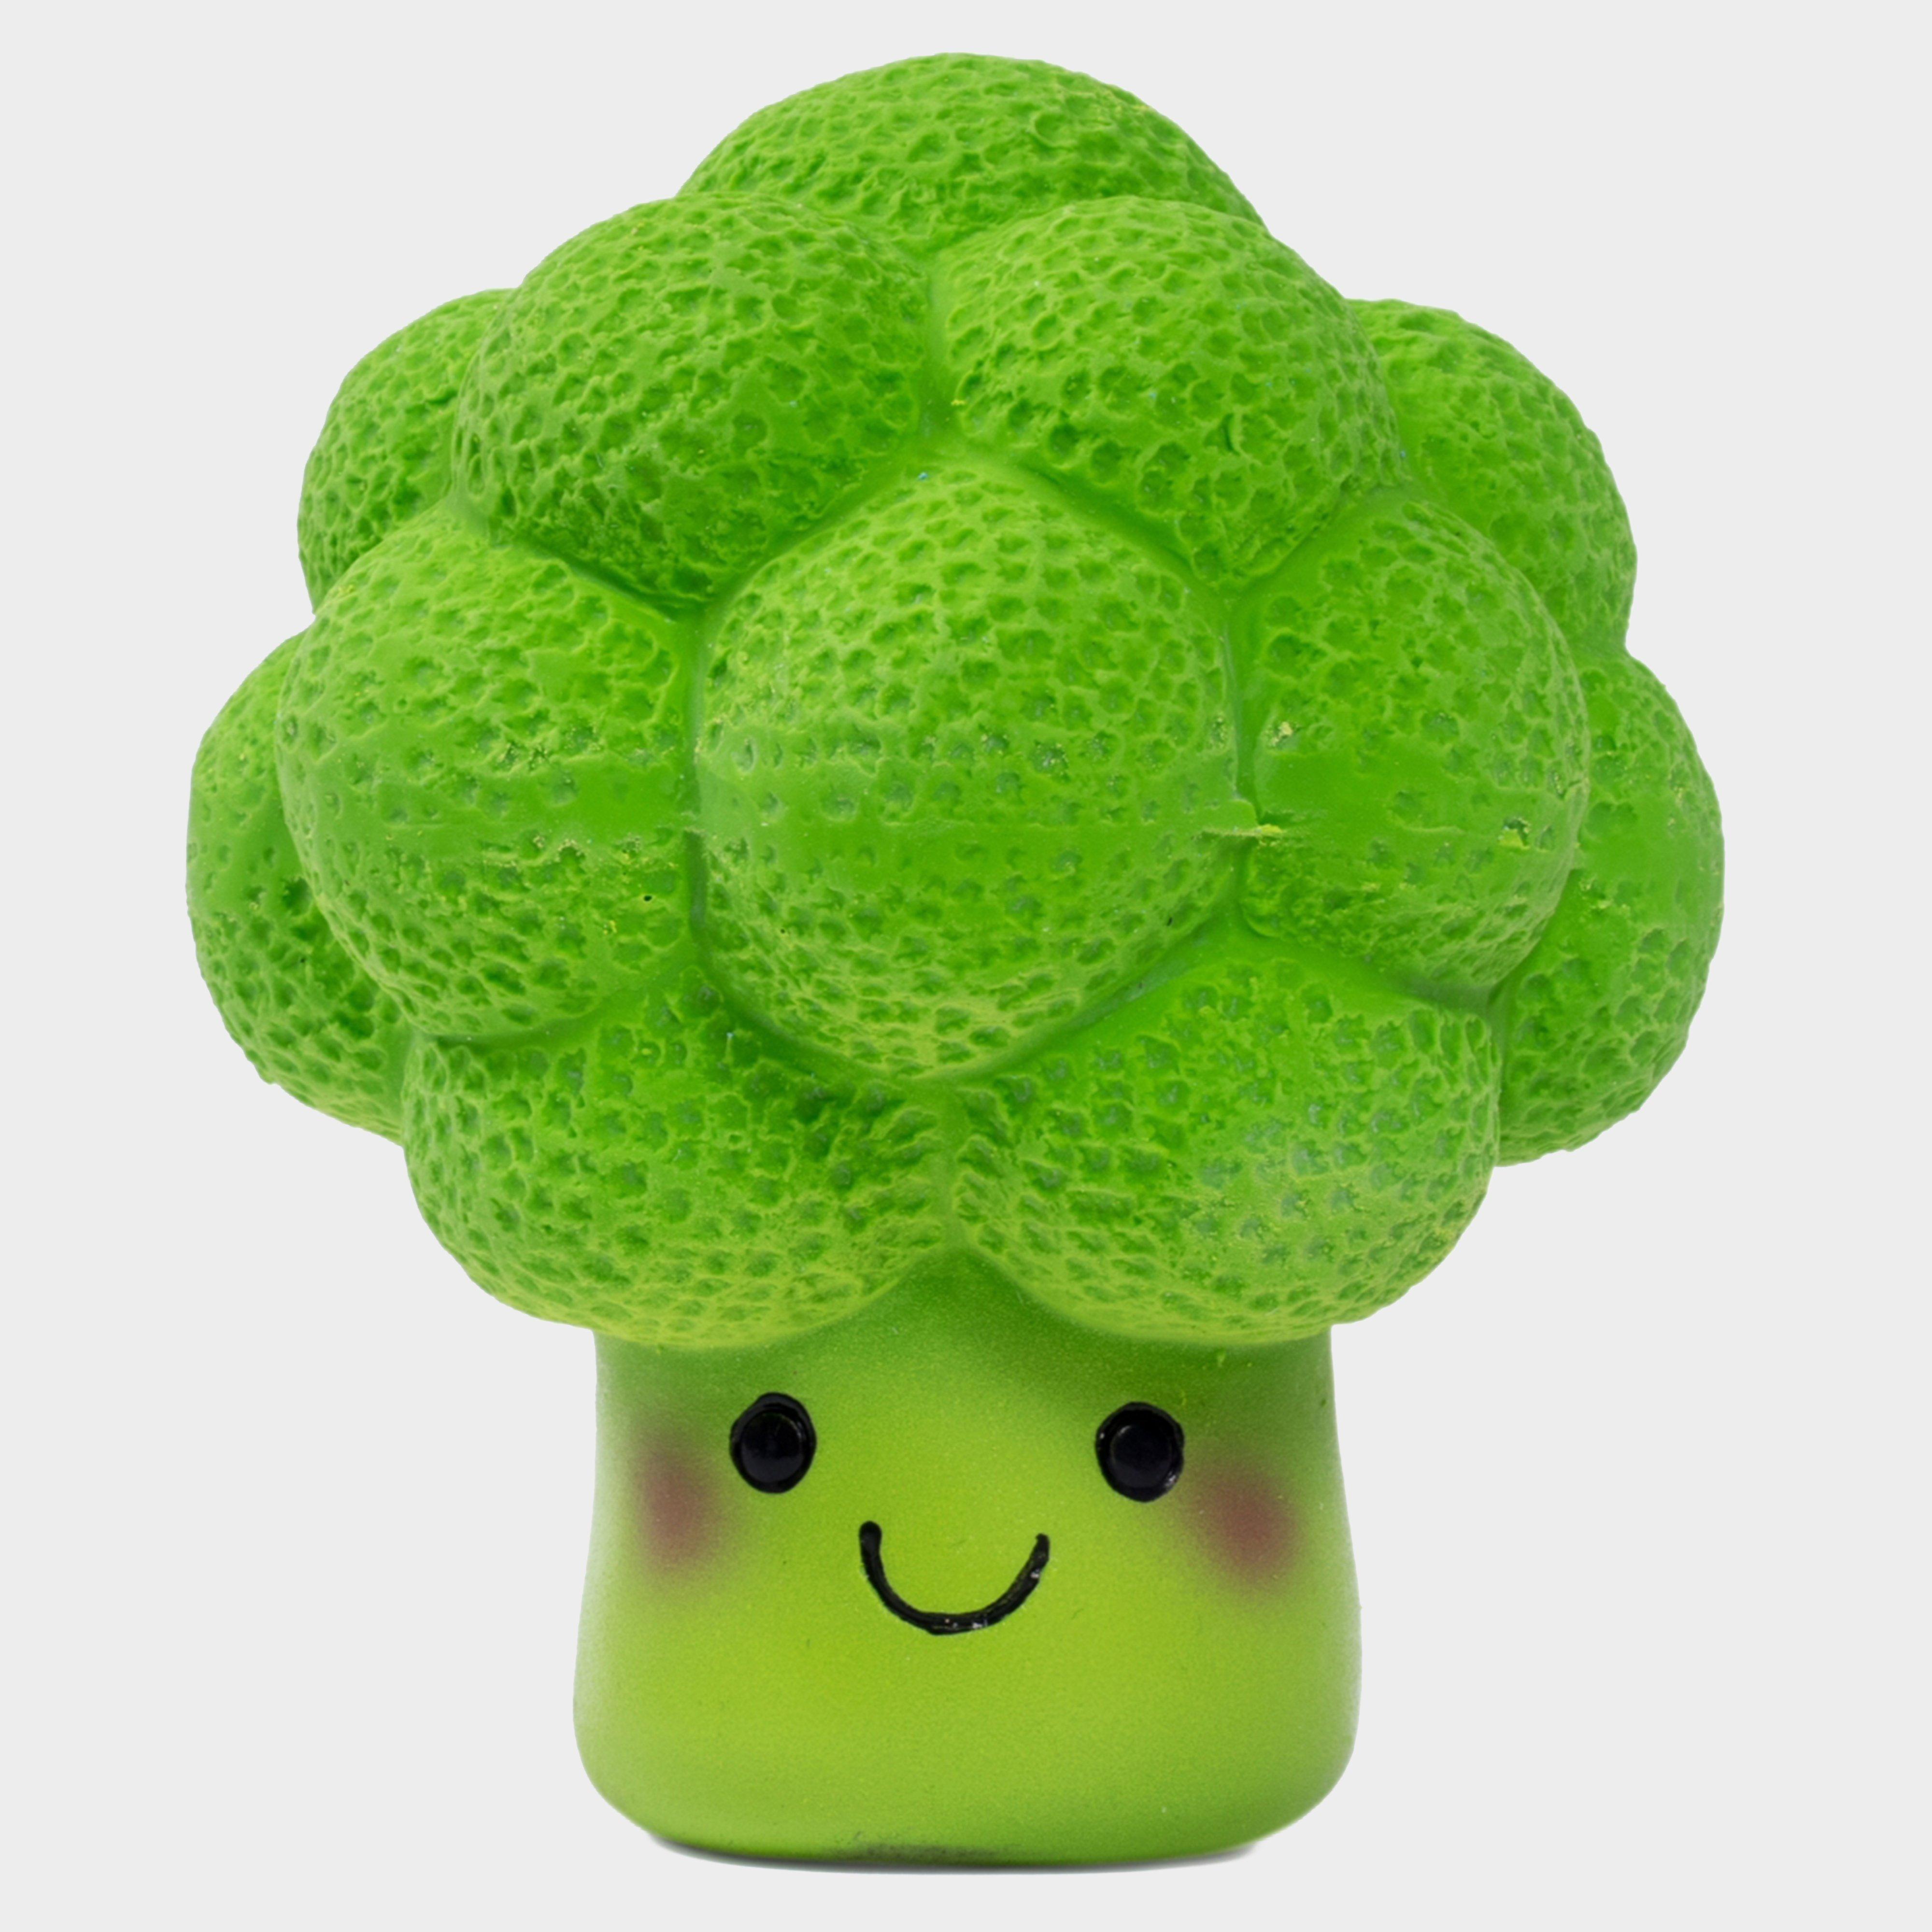 Latex Dog Toy Small Broccoli - Green, Green